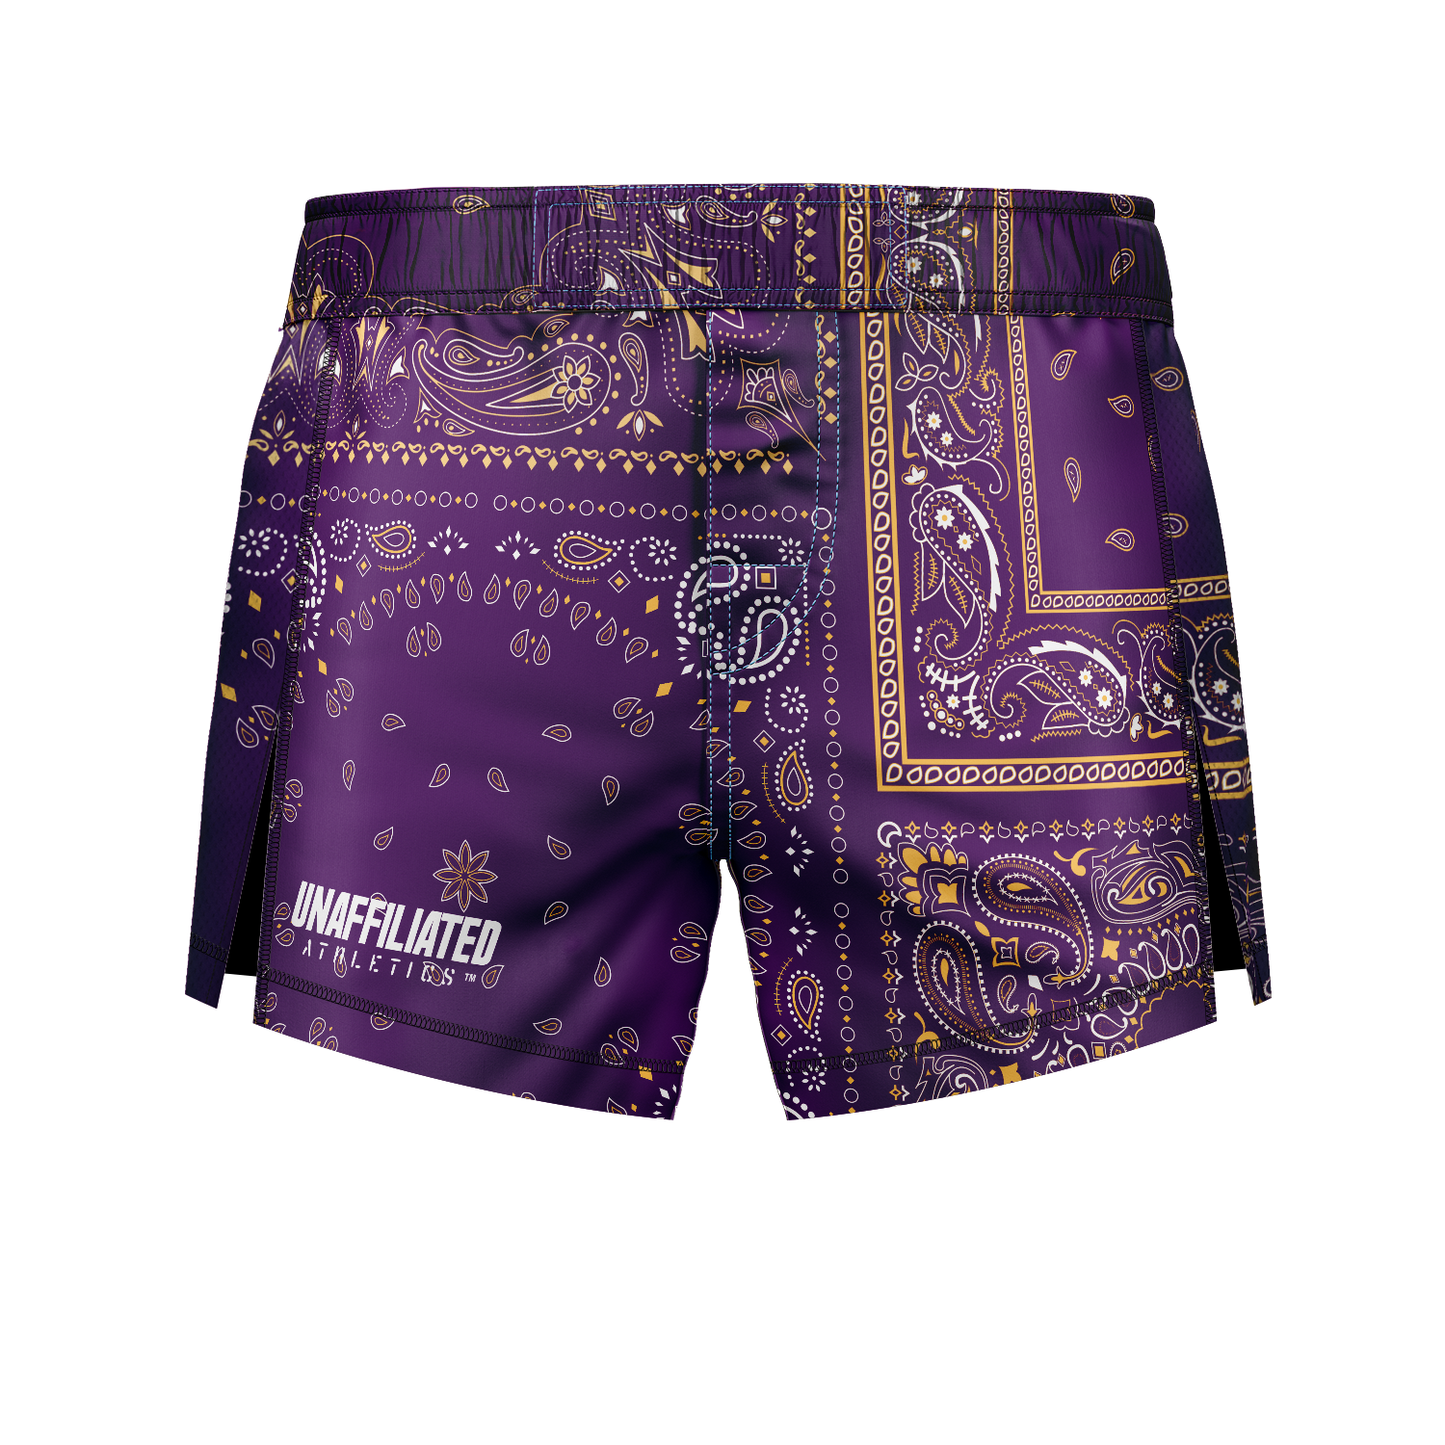 Unaffiliated Athletics muay thai shorts Paisley, purple